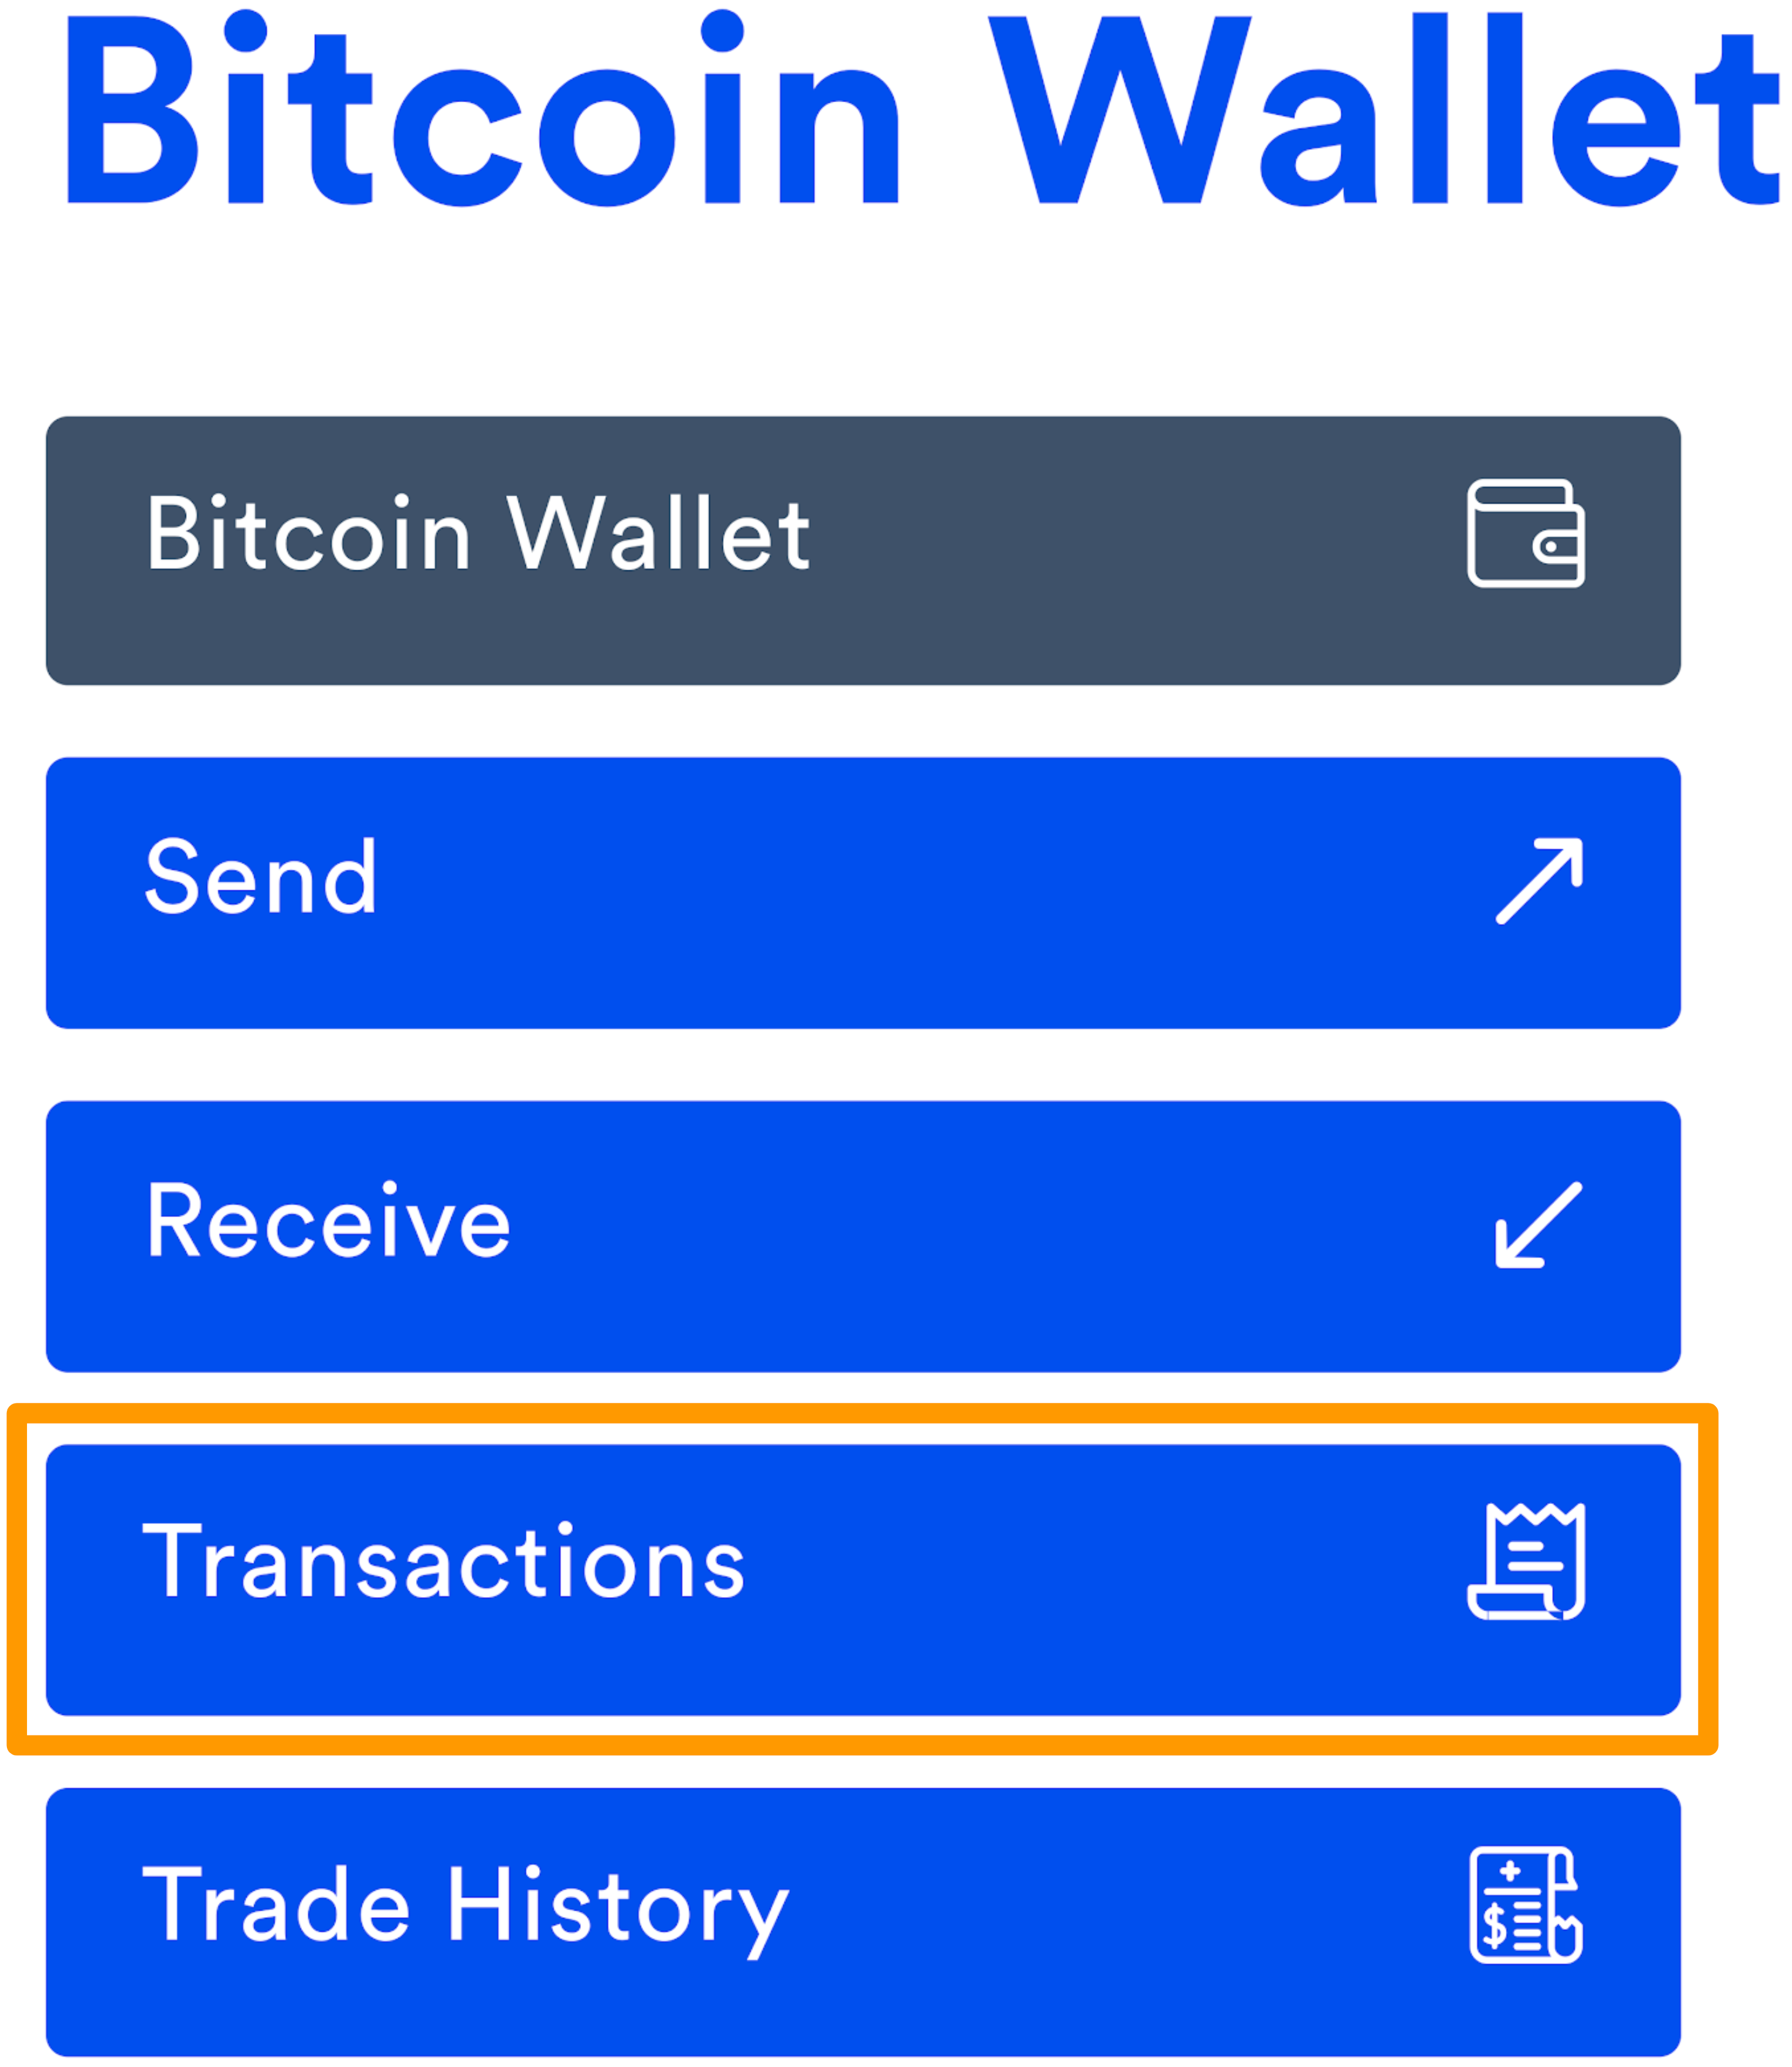 BTC_Wallet_transactions.png